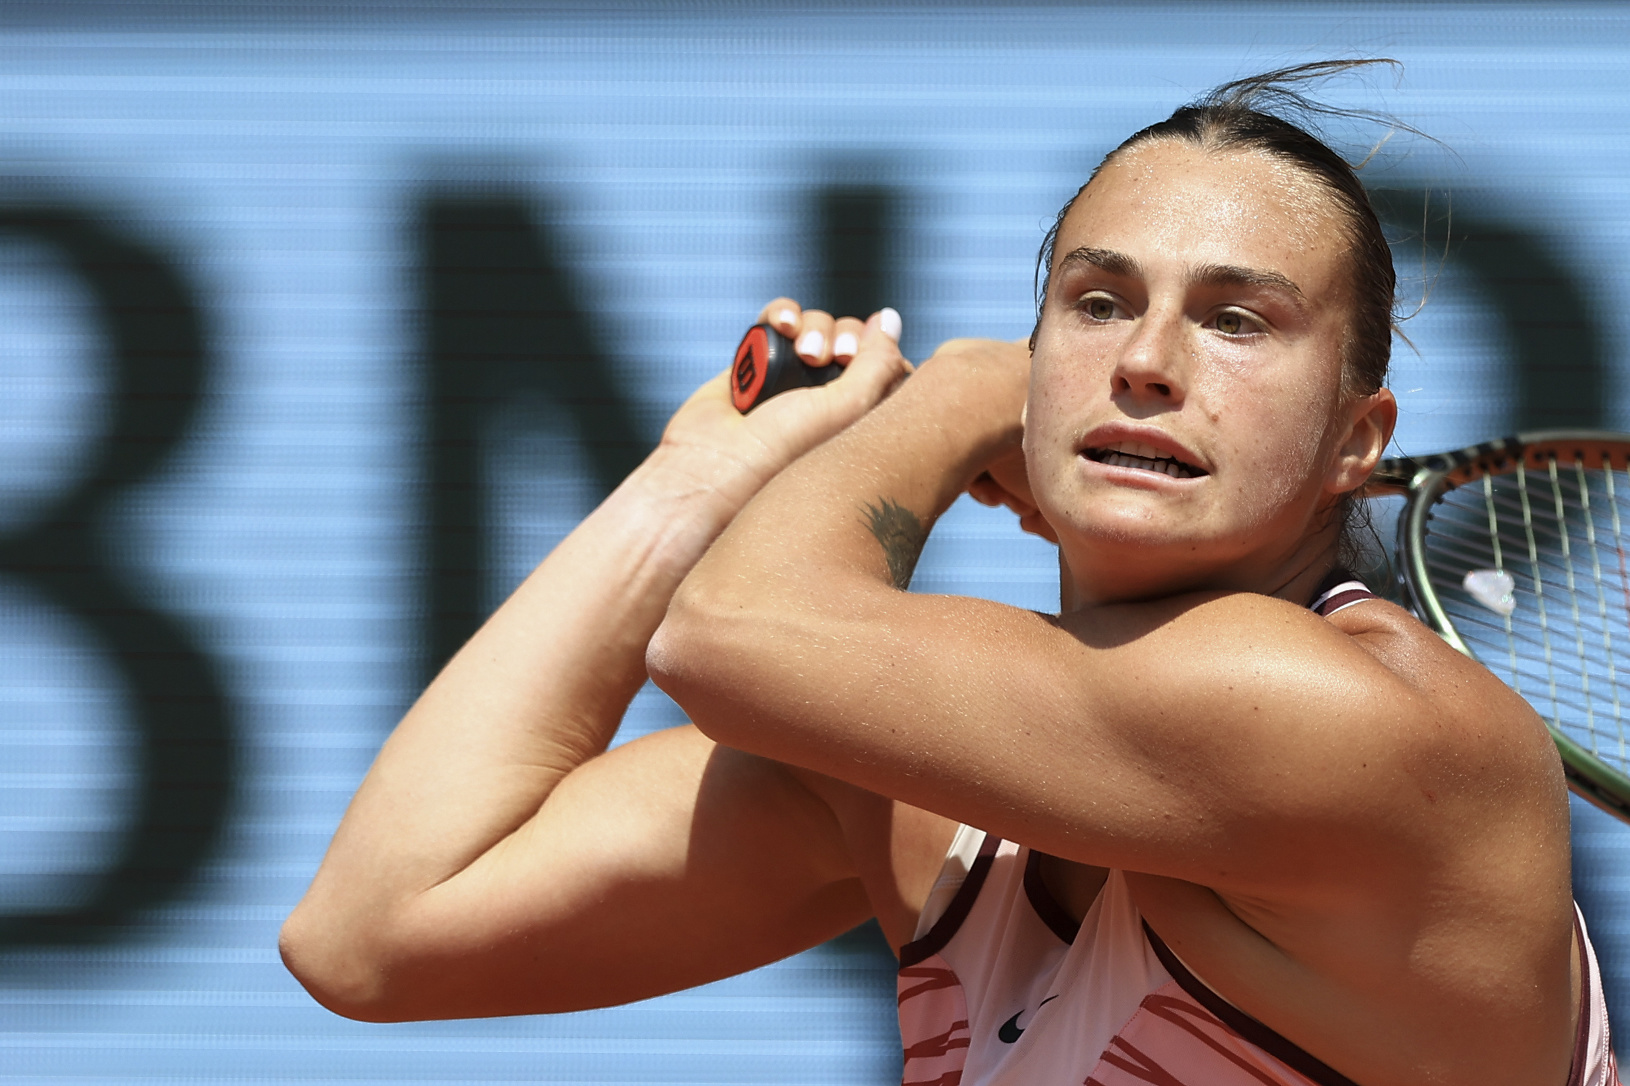 Bieloruská tenistka Aryna Sabalenková